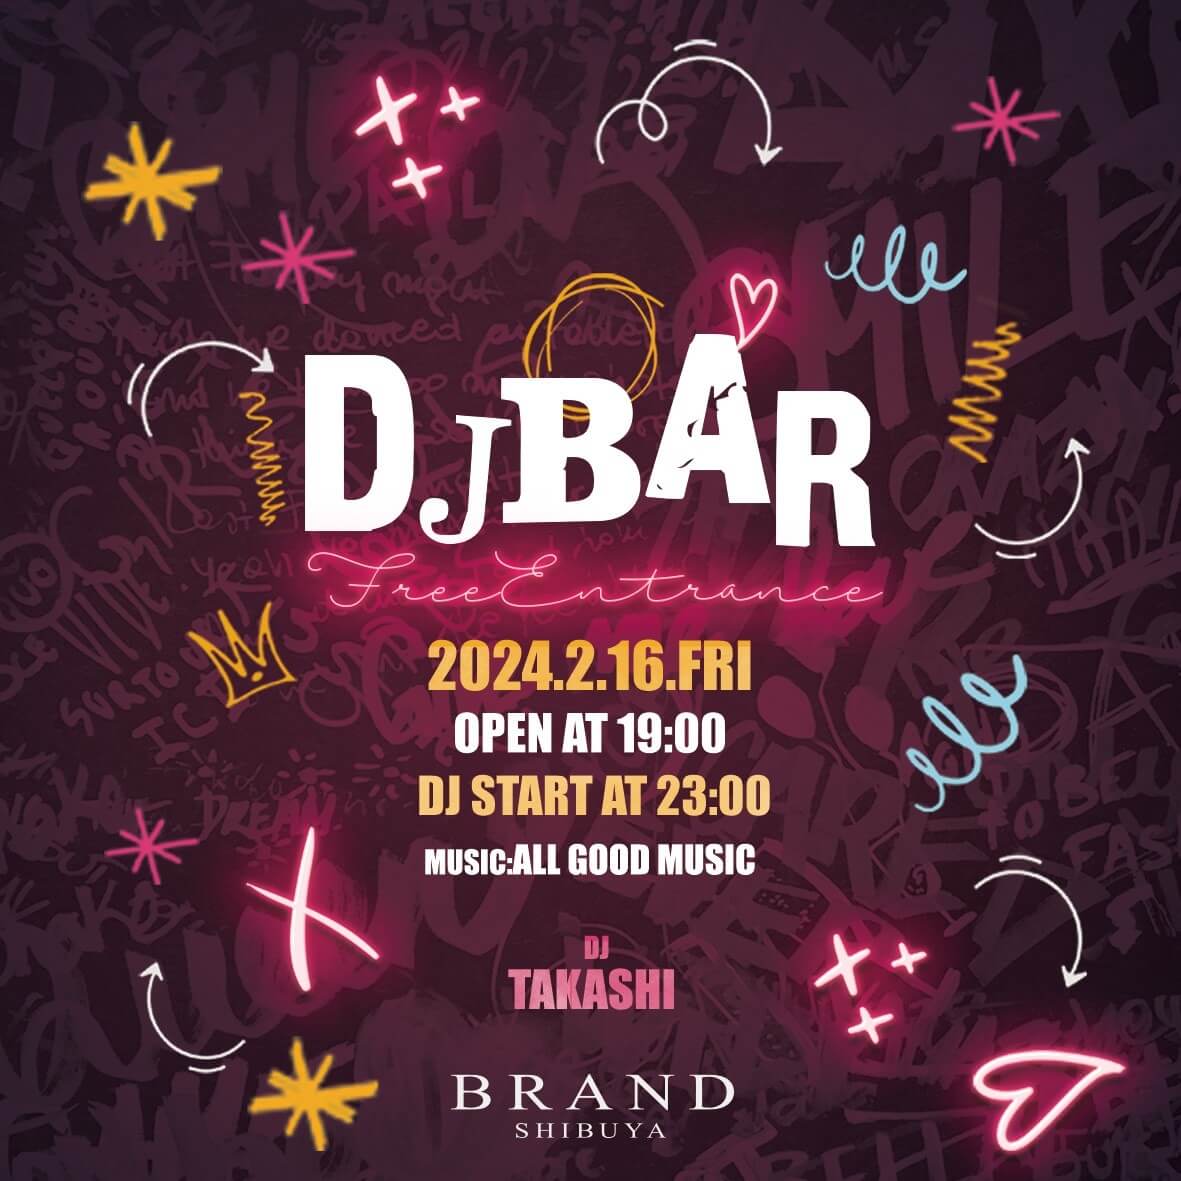 DJBAR 2024年02月16日（金曜日）に渋谷 クラブのBRAND SHIBUYAで開催されるALL MIXイベント